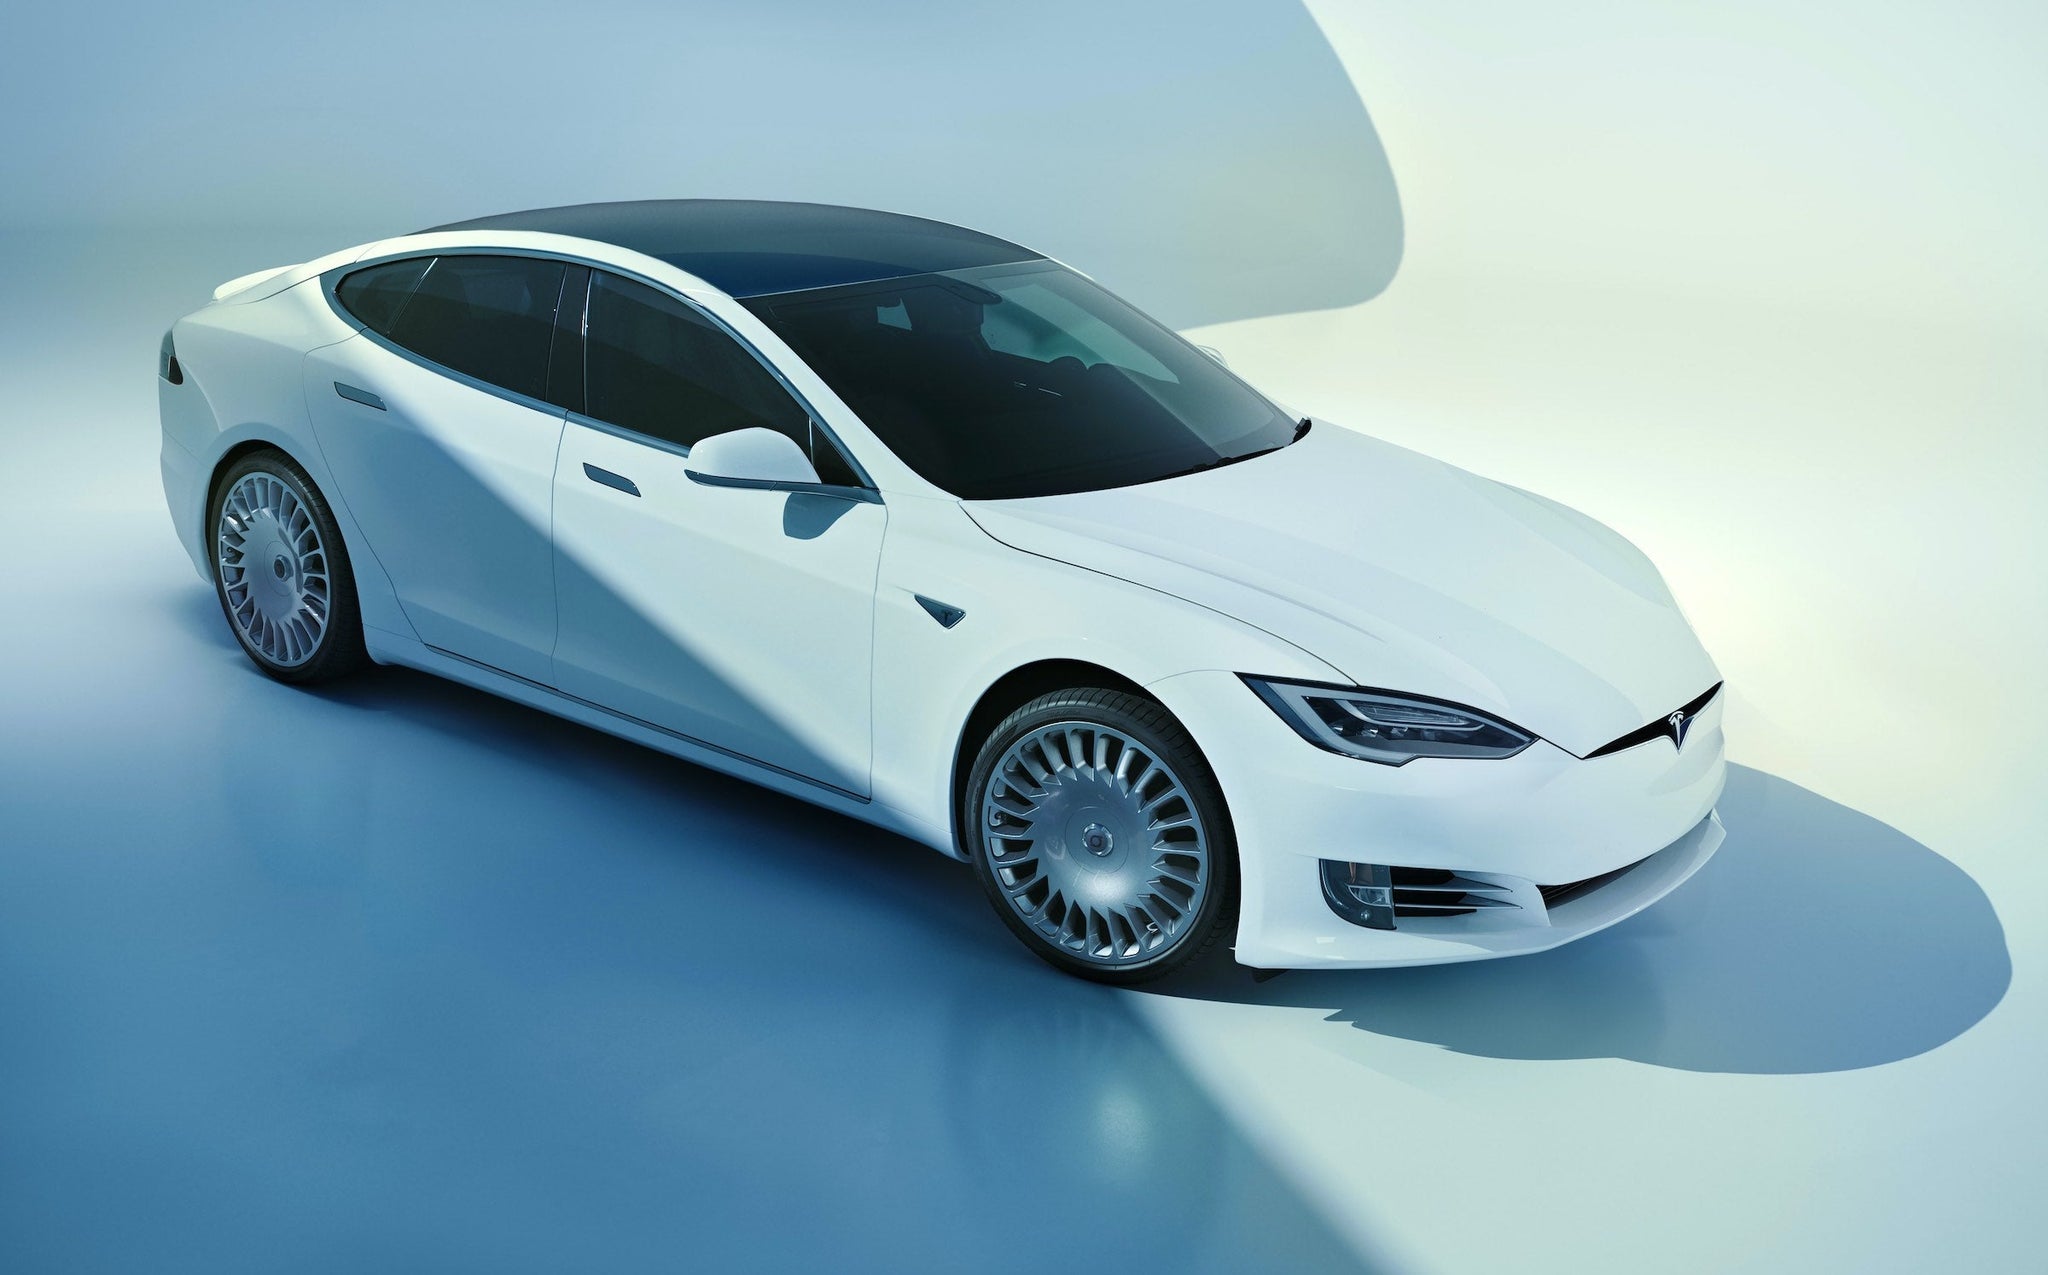 The New Aero rims for Model S